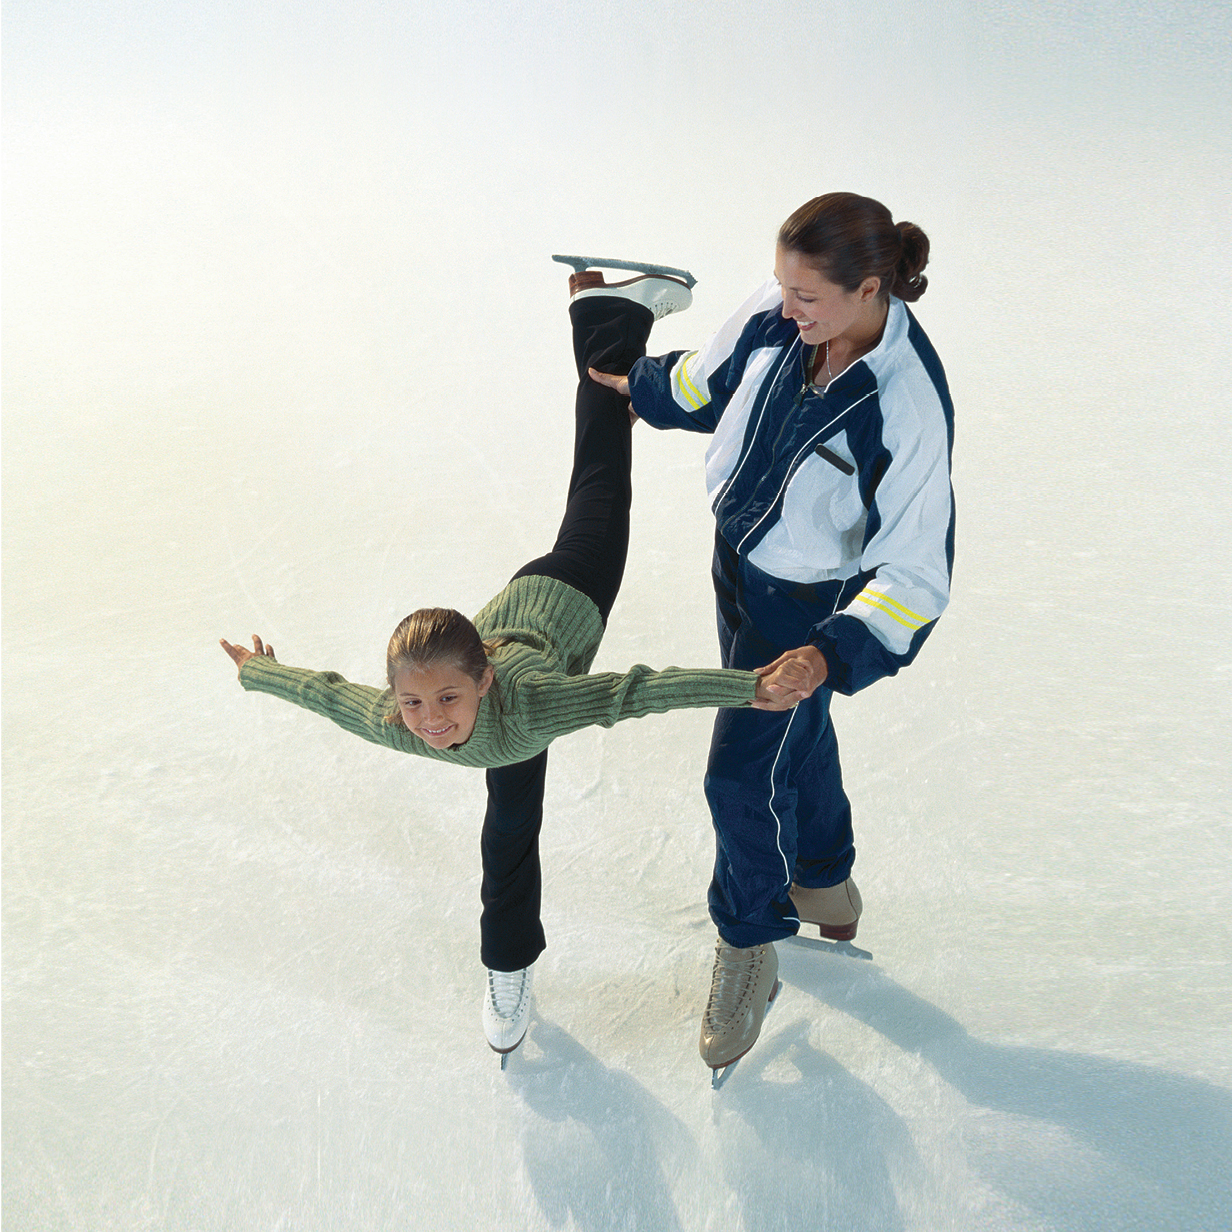 Ice Skating dubai offers